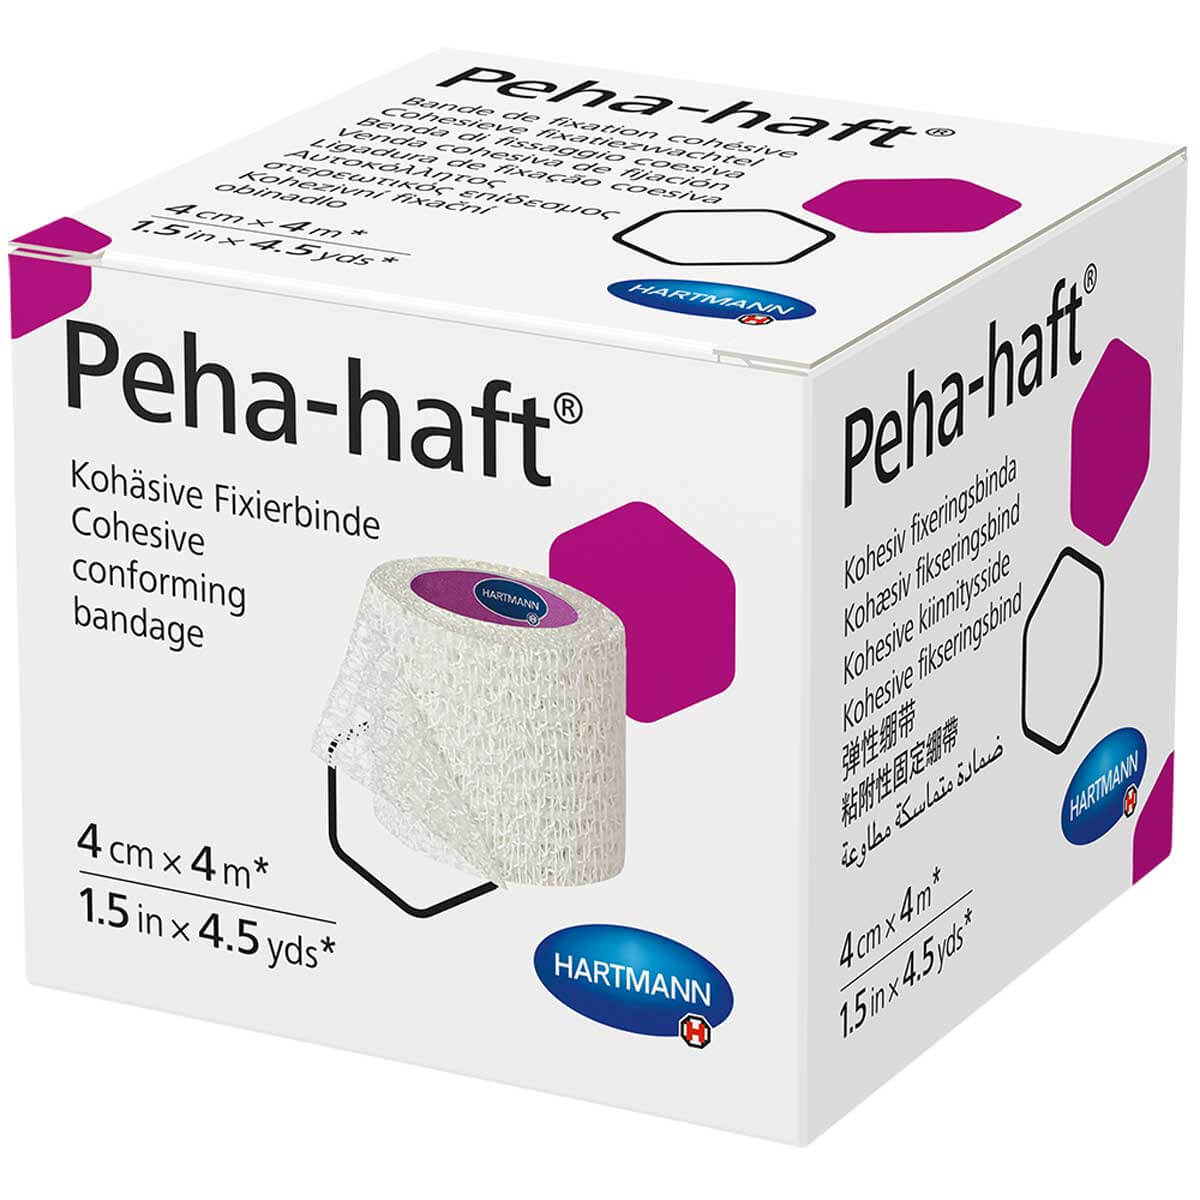 HARTMANN Peha-haft latex-free fixation bandage